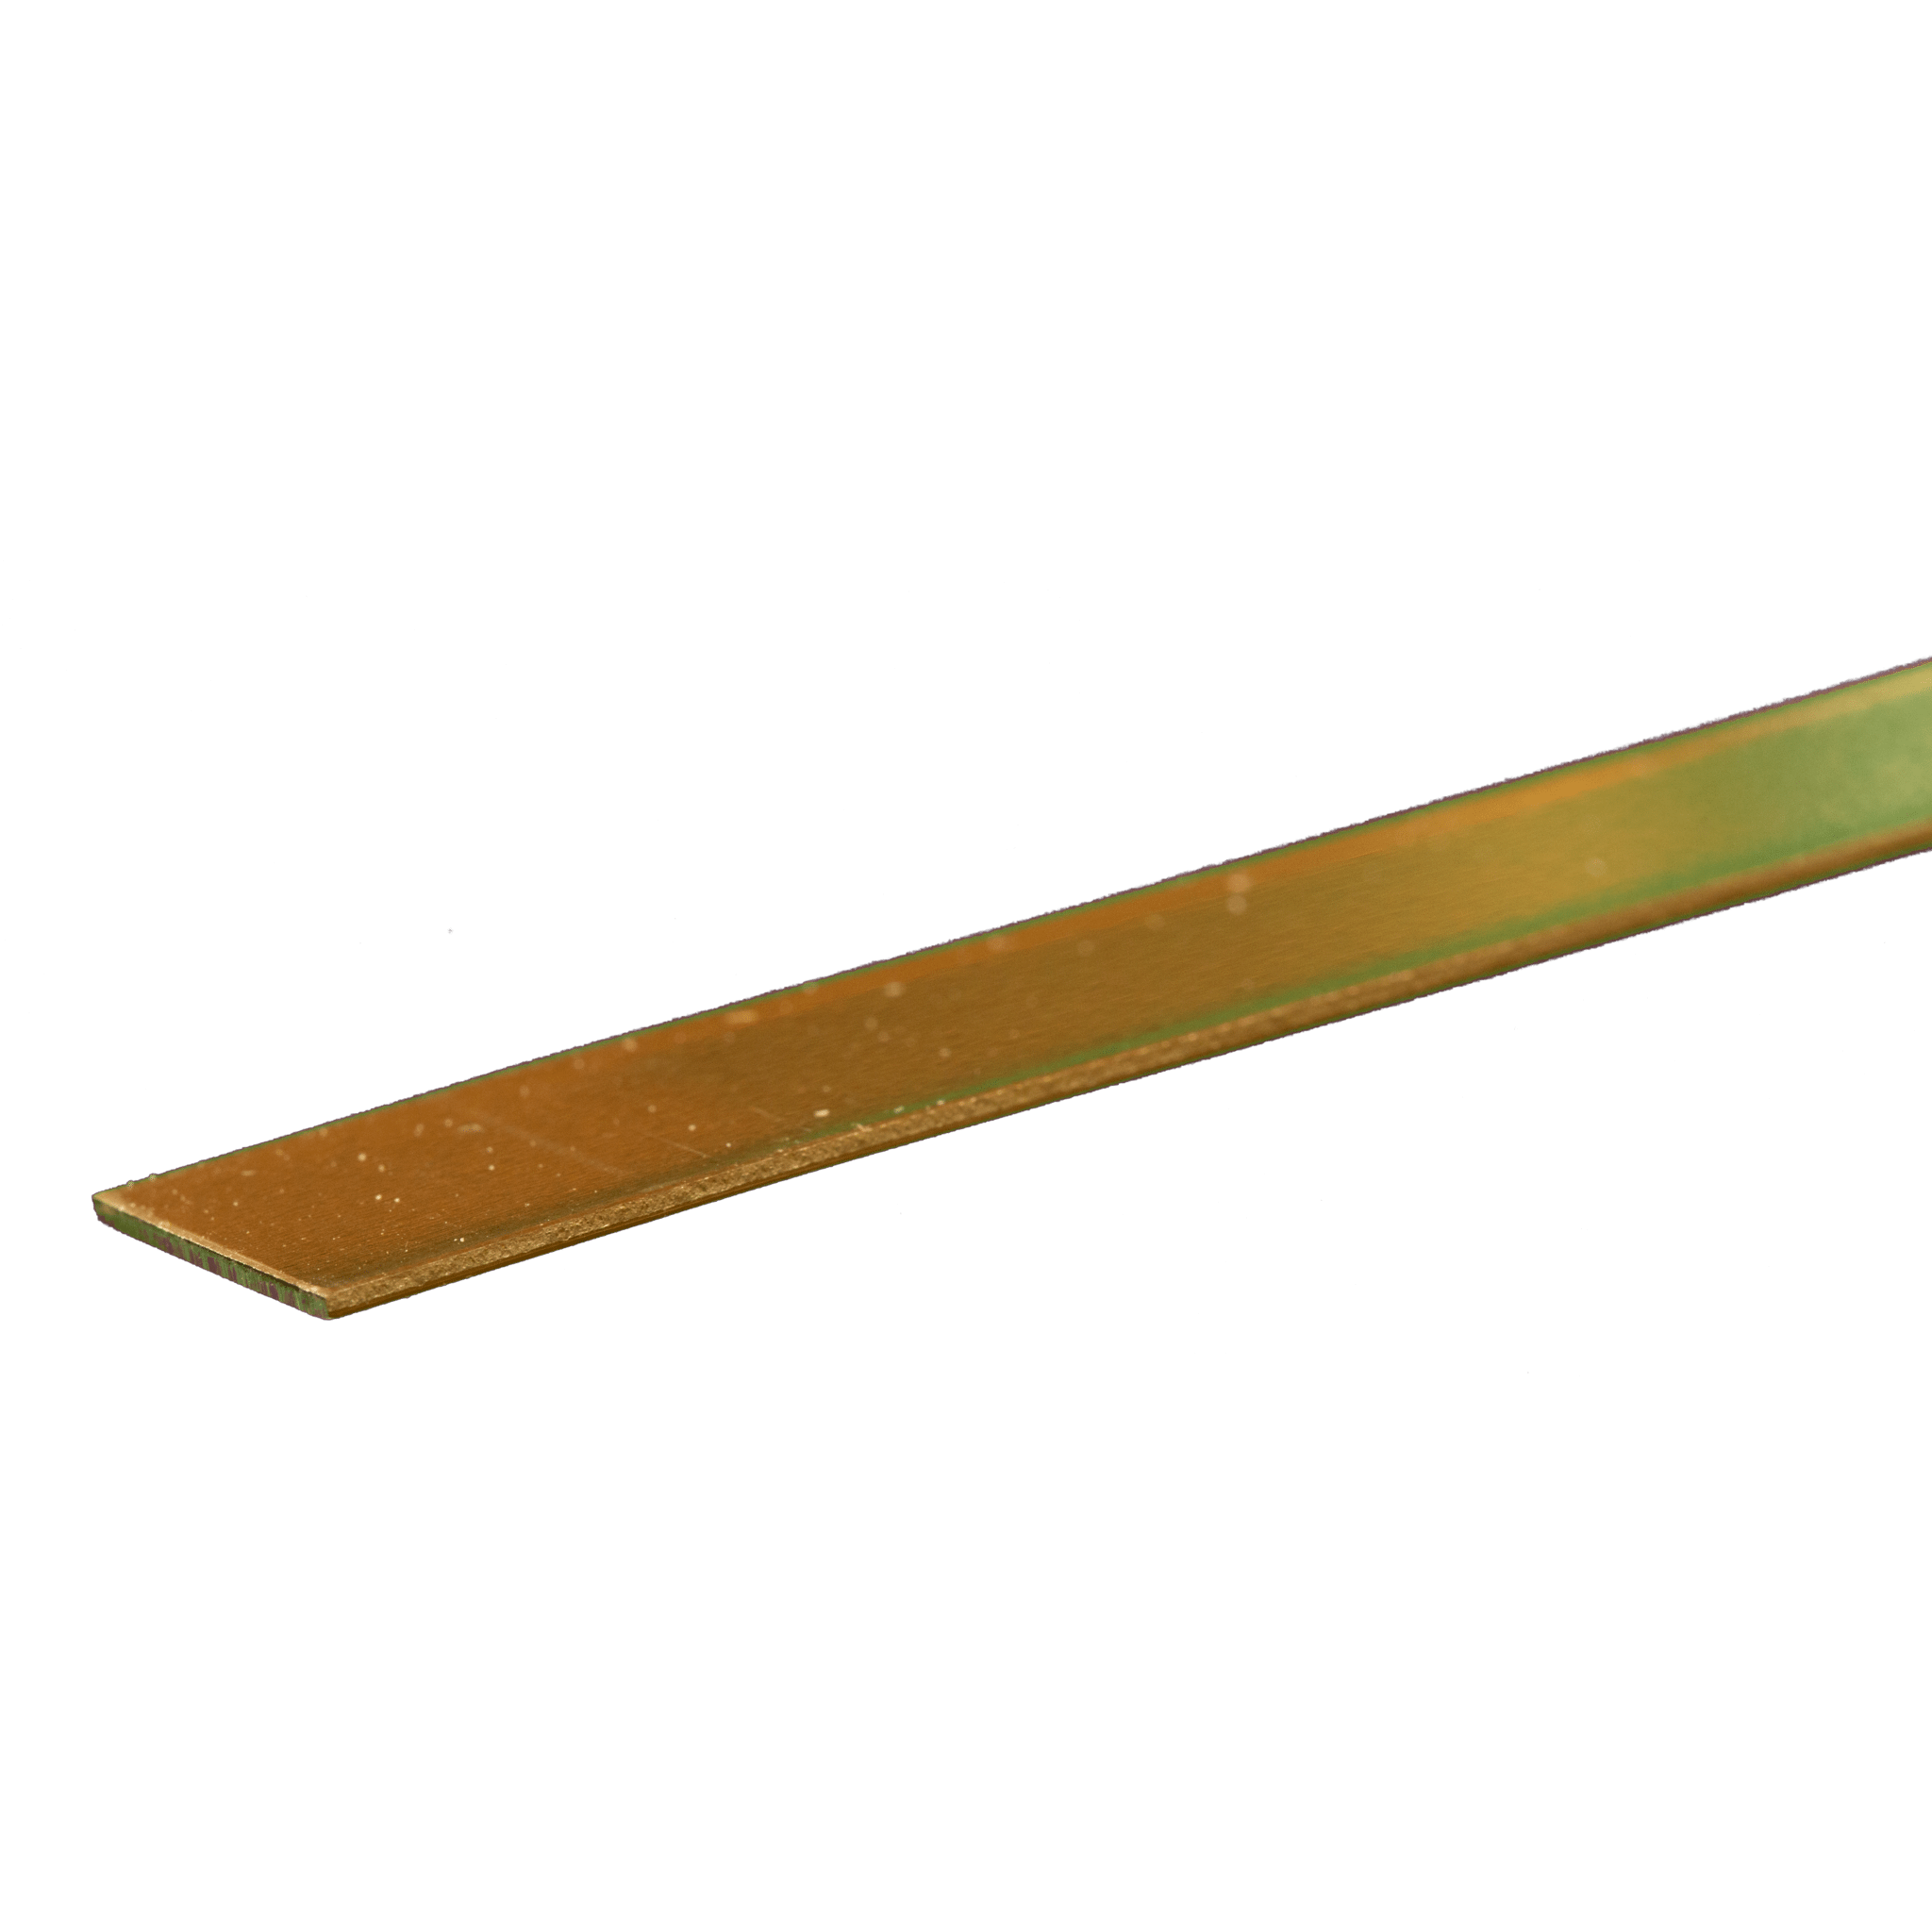 K&S Metals 8241 Brass Strip 0.032" Thick X 1/2" Wide x 12" Long (1 Piece)